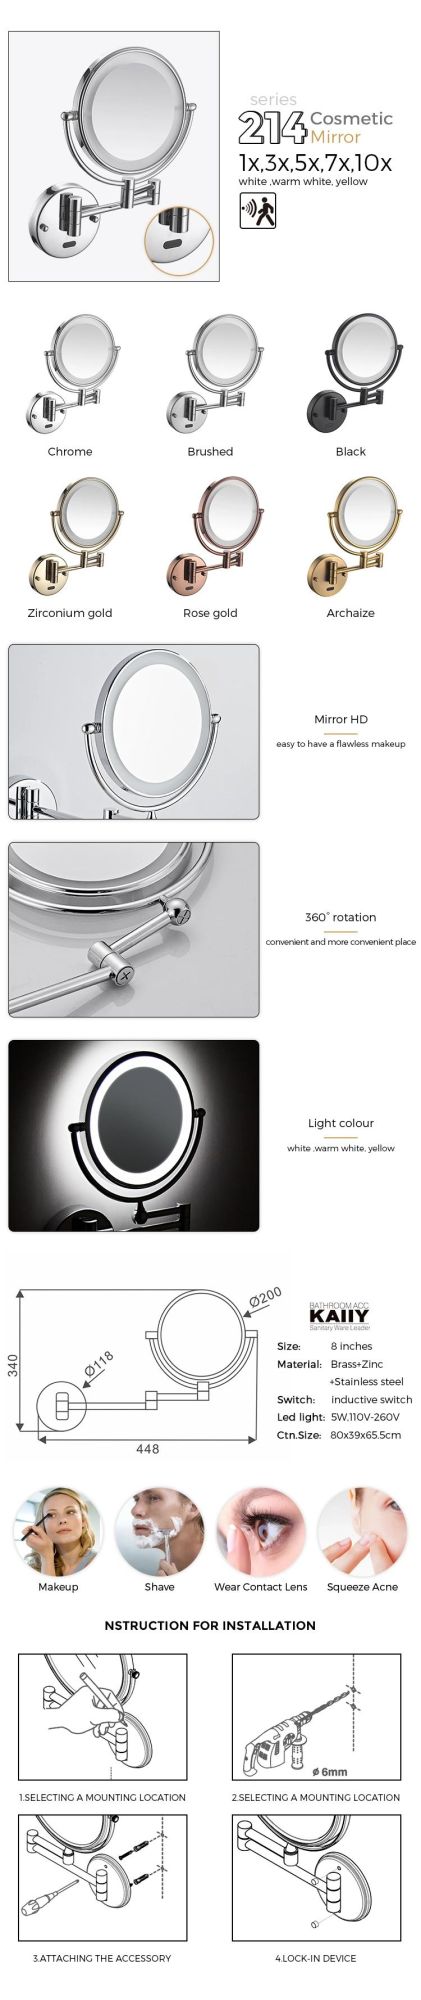 Kaiiy Round Shape Human Body Induction LED Smart Mirror for Hotel Bathroom